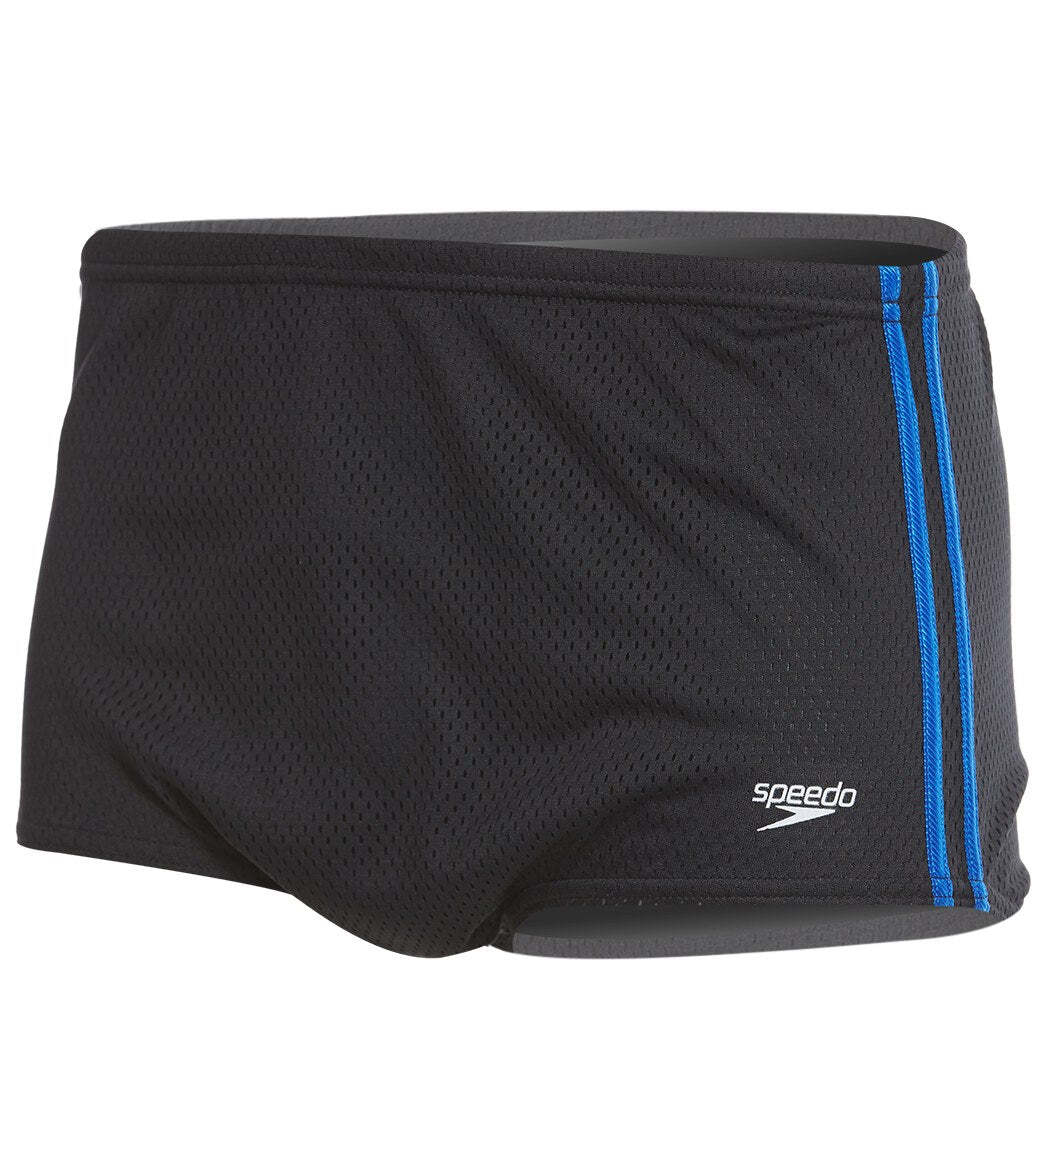 Speedo Black/Blue Size 32 Poly Mesh Square Leg Swimsuit